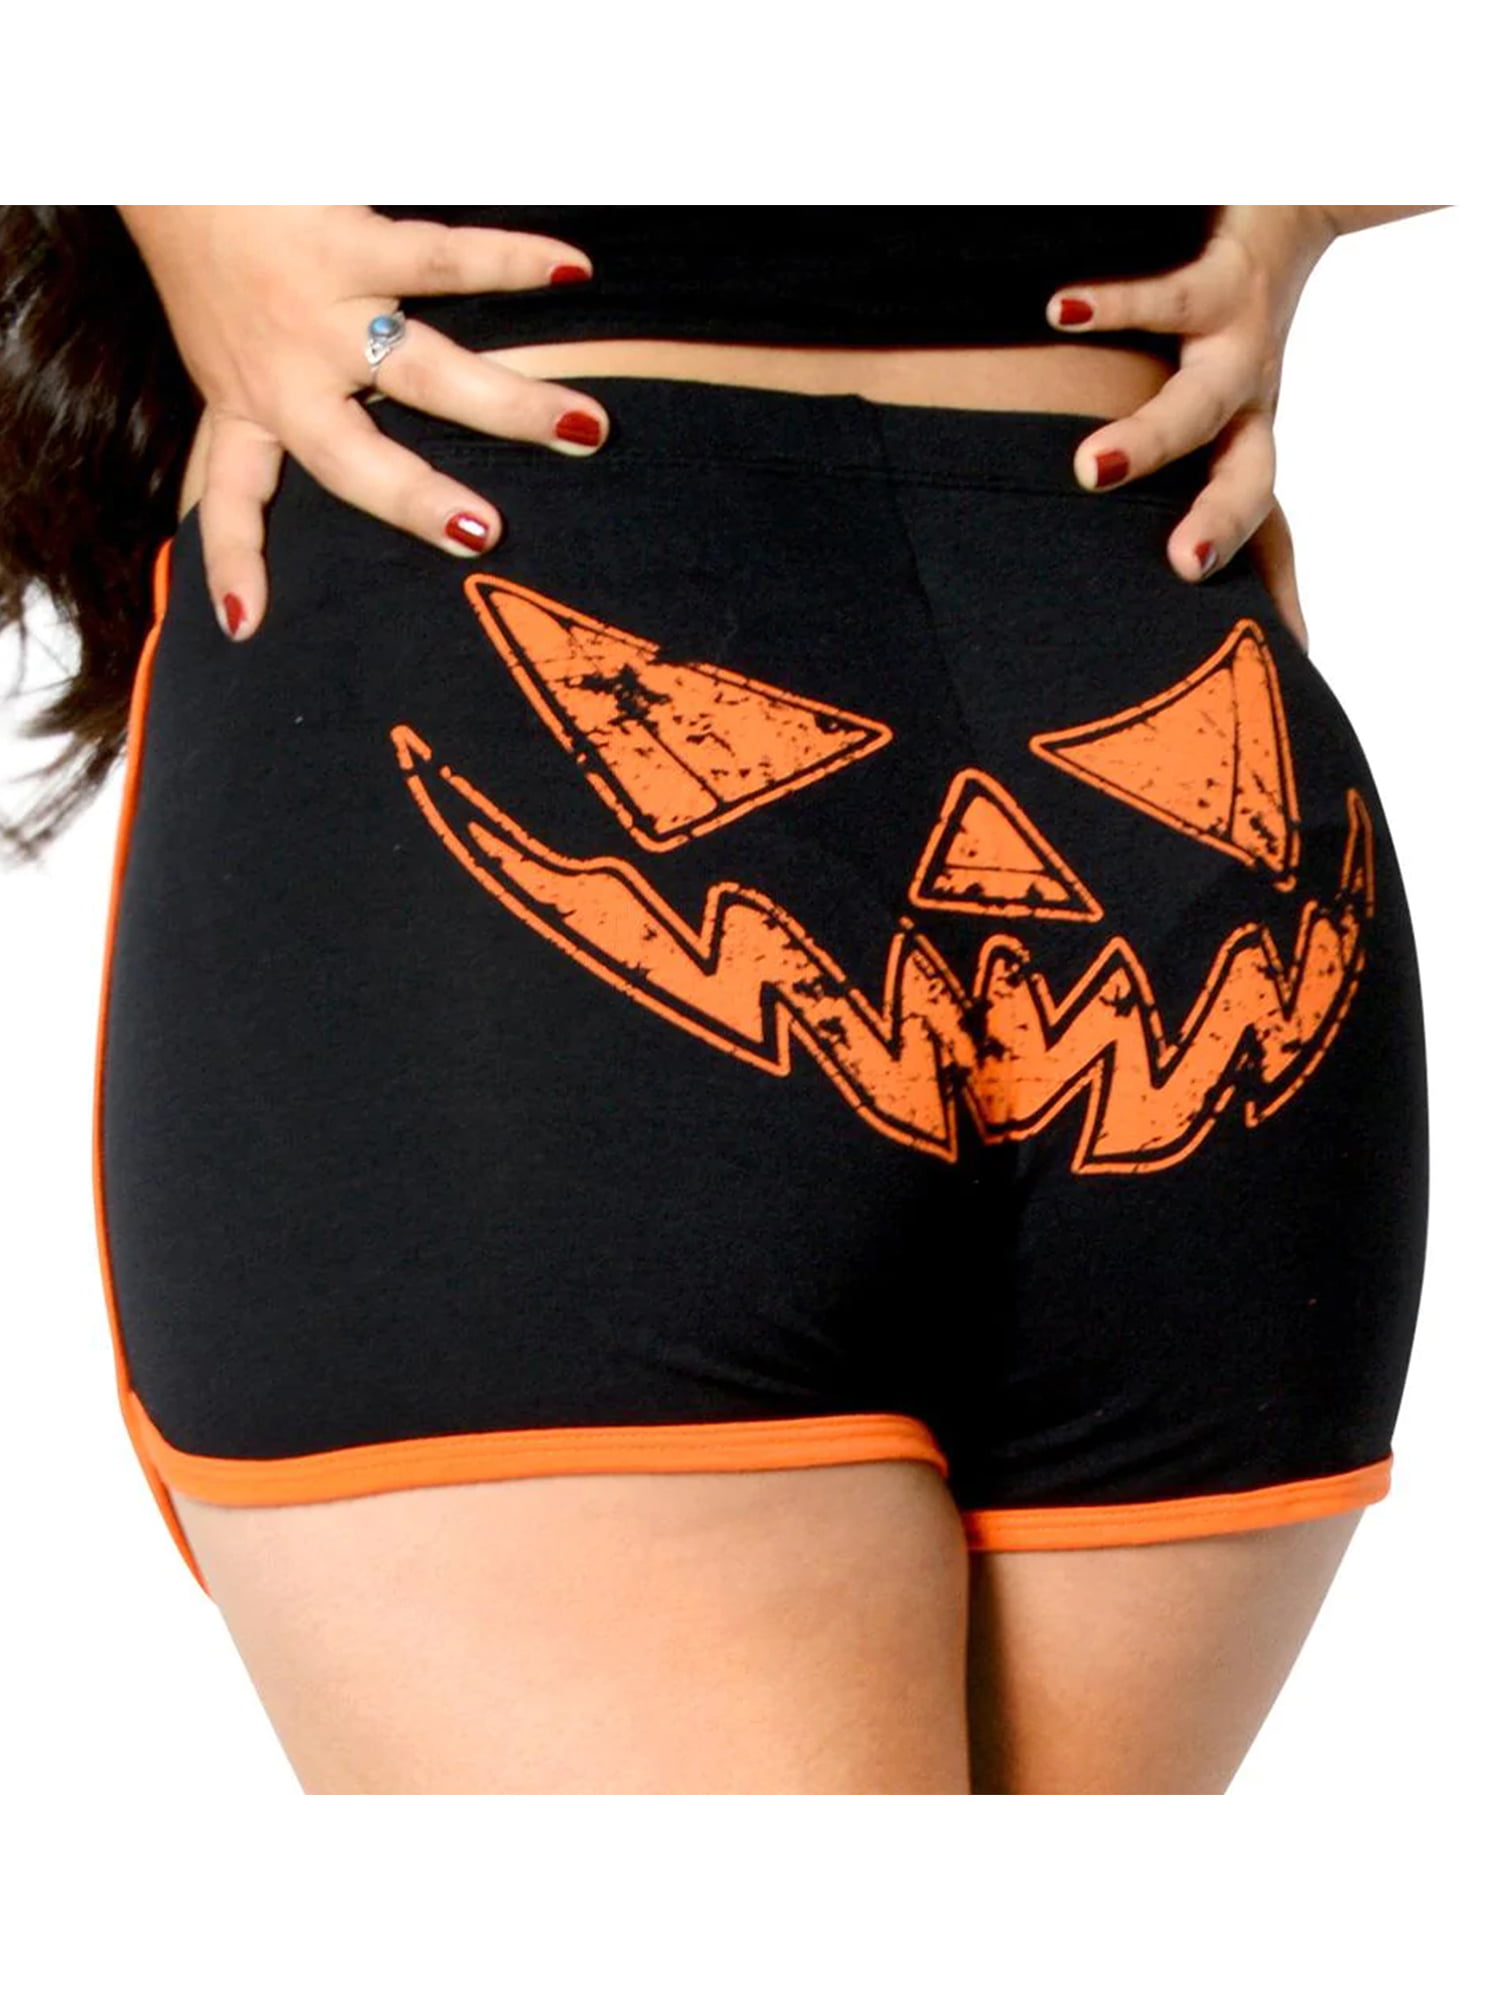 Peyakidsaa Women Funny Halloween Shorts Skeleton Print Elastic Low Rise Running  Shorts 